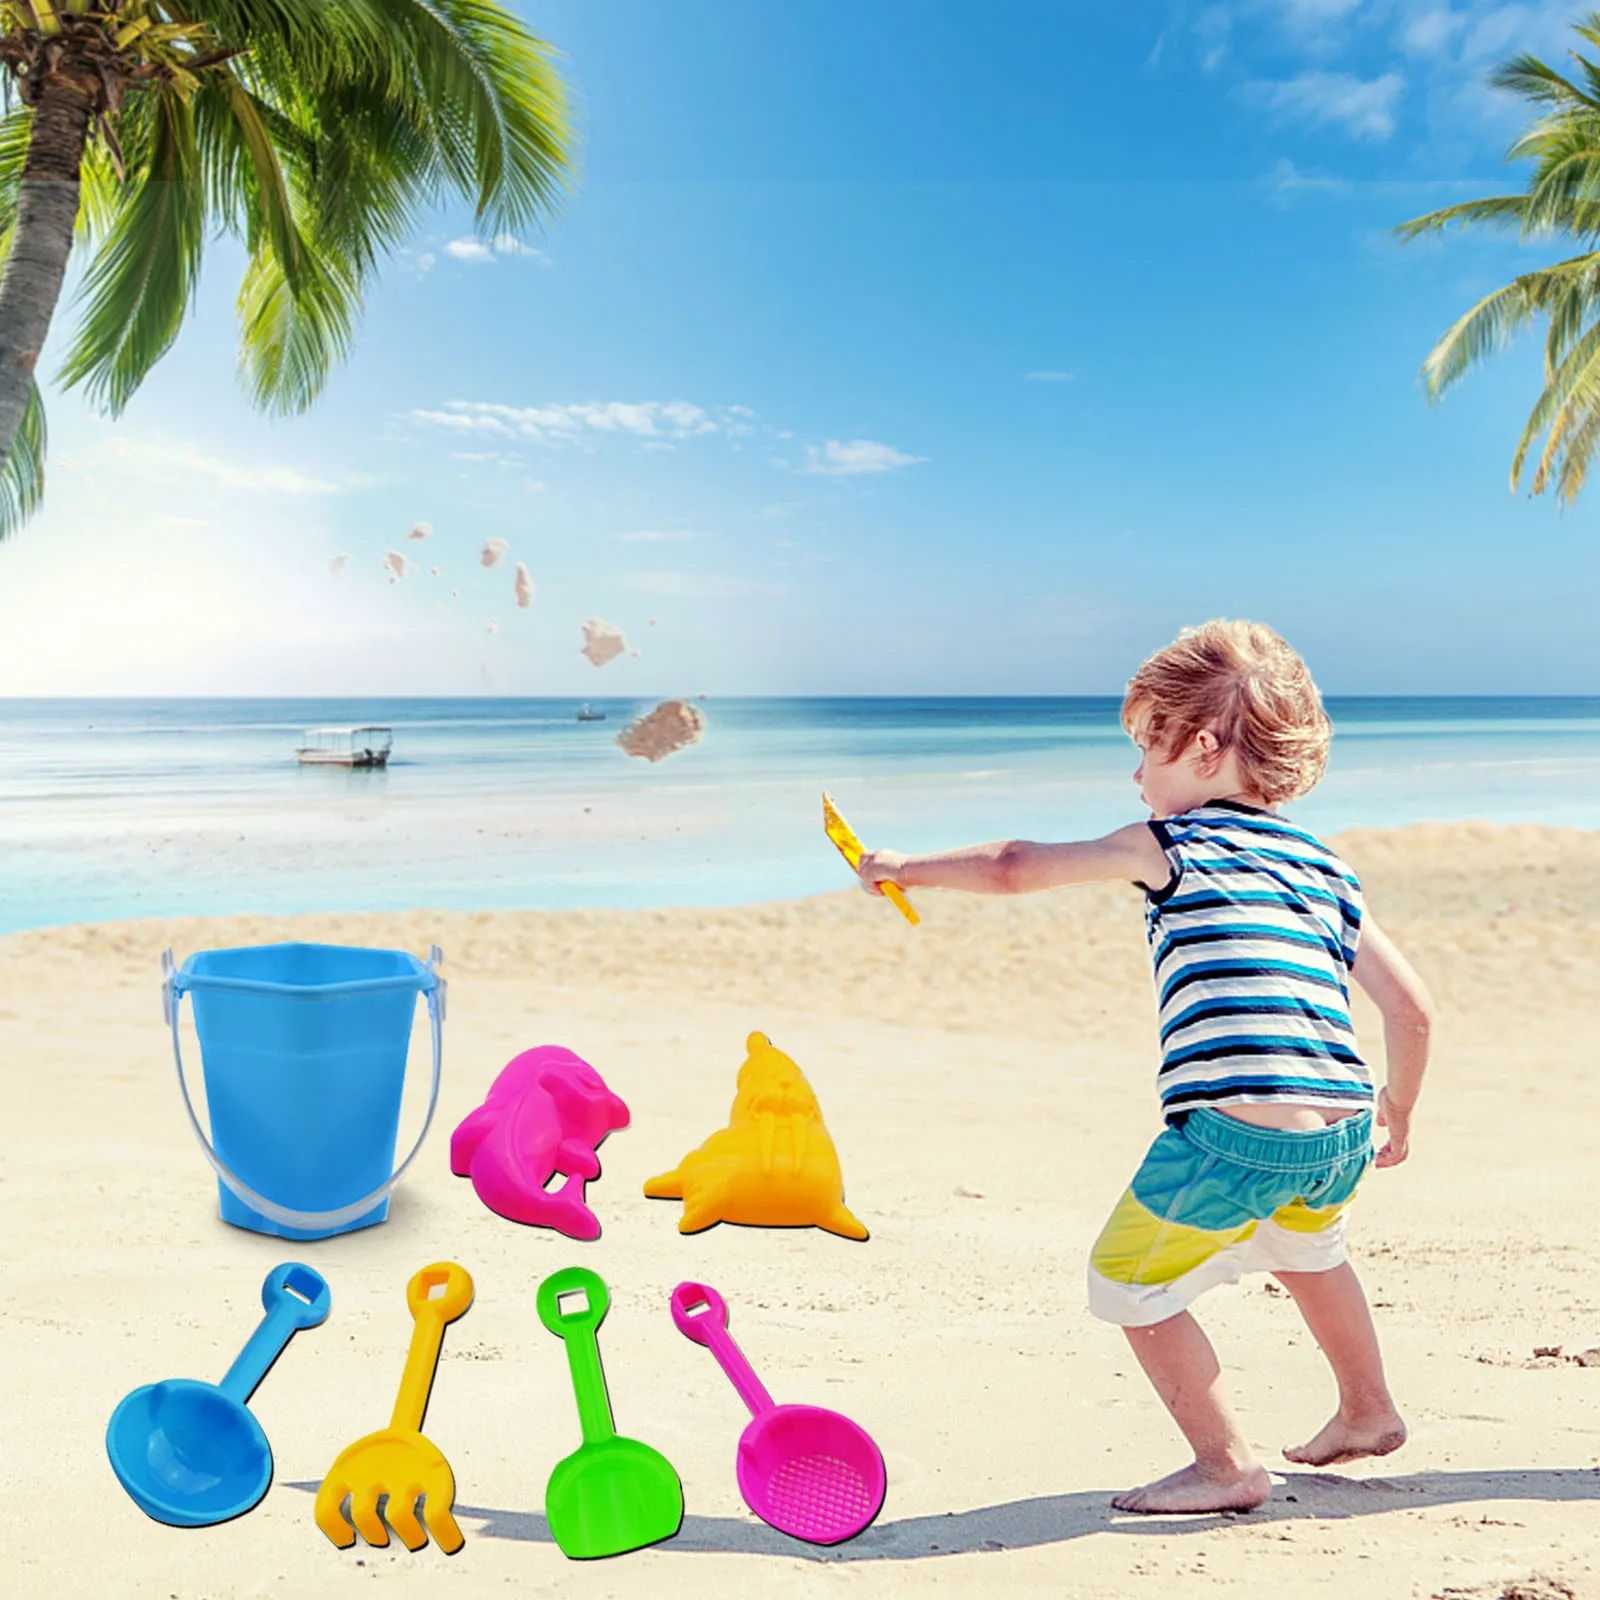 

Outdoor Beach Toy Sand Set Sand Play Sandpit Toy Summer Game For Boys Girls Bucket Shovel Sand Play Sandpit Toys Sets 7pcs hot